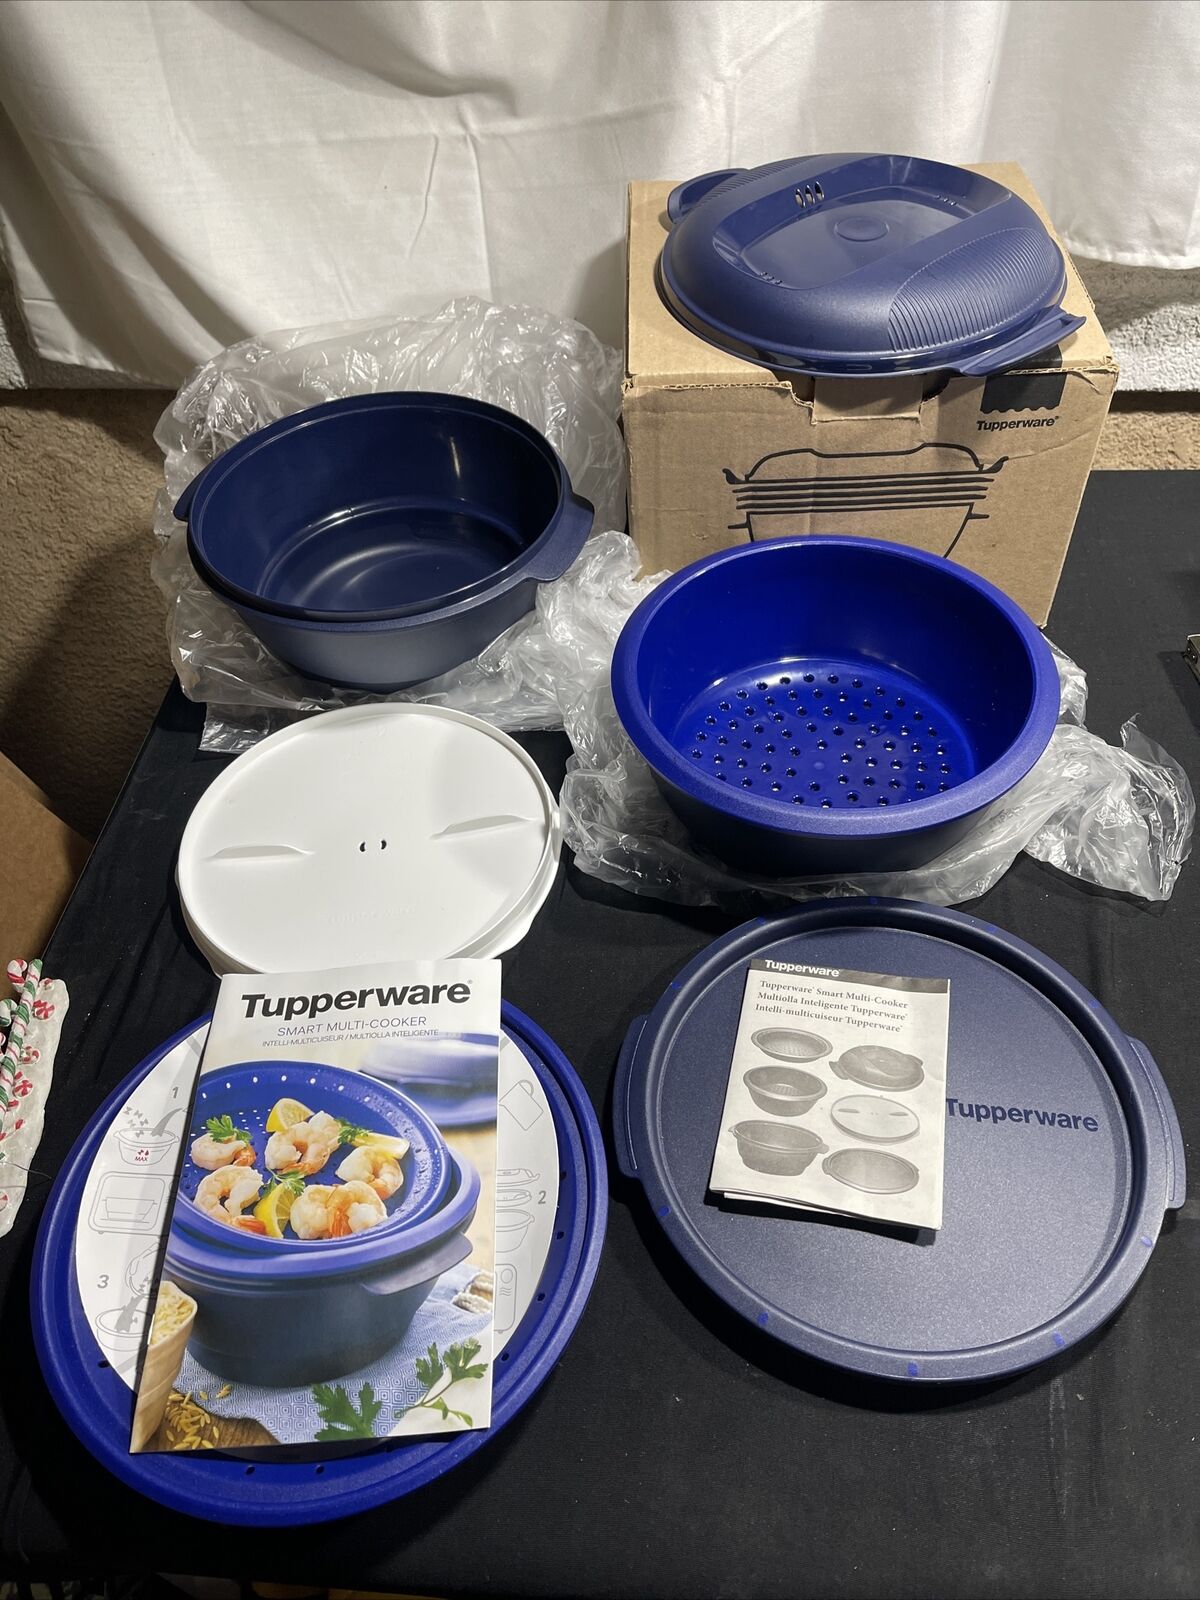 Tupperware Smart Multi-Cooker Microwave Steamer Cooker Cobalt Blue New Open Box